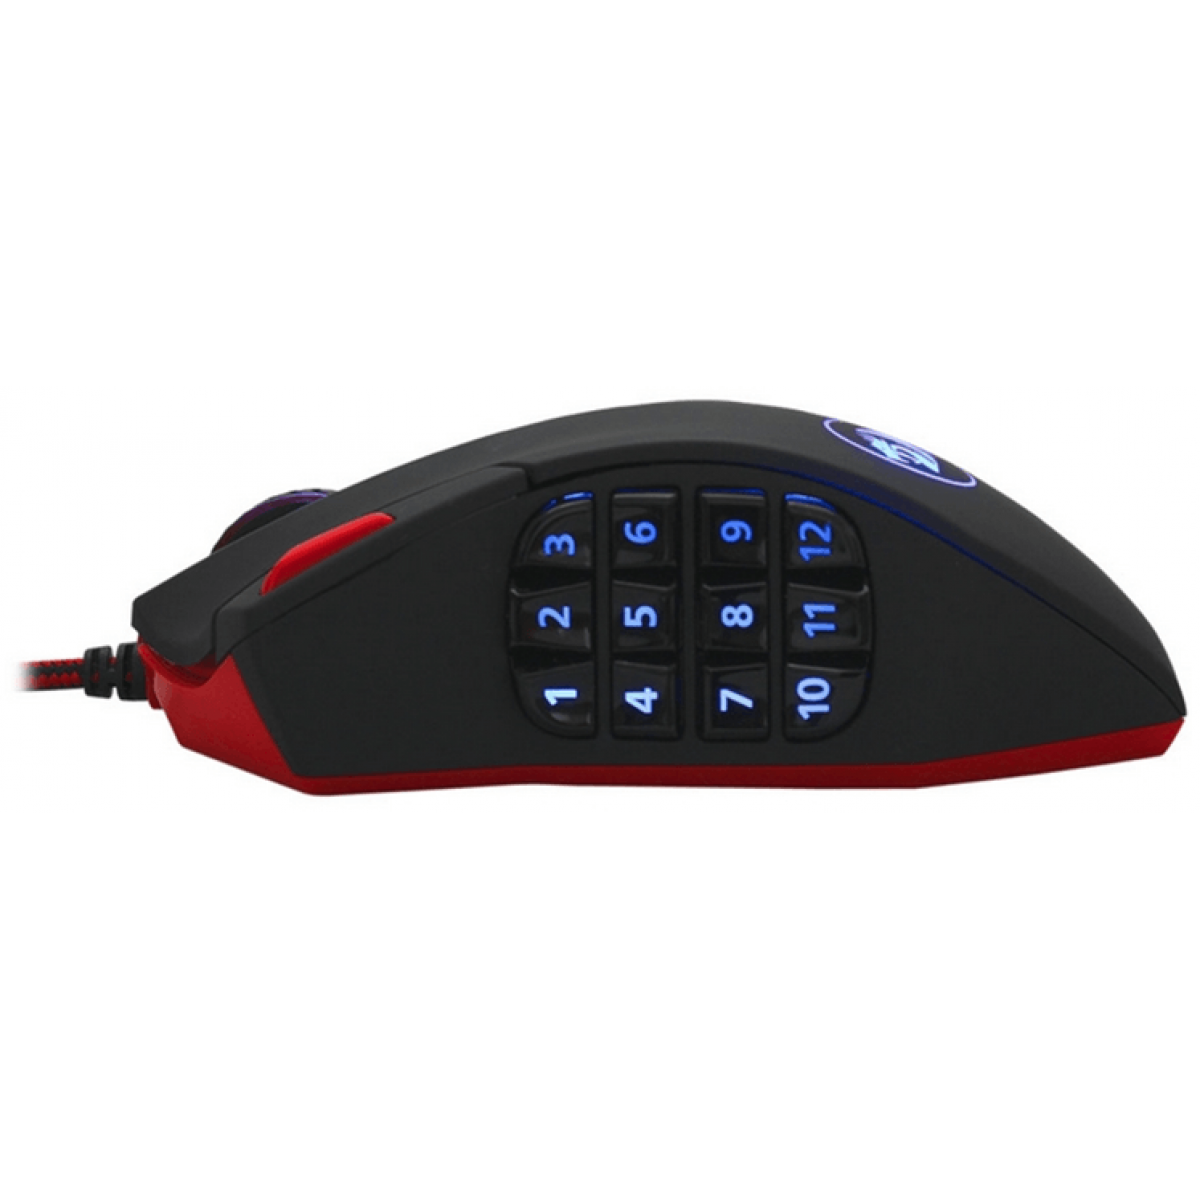 Mouse Gamer Redragon Perdition 2 M901-1 RGB, 24000 DPI, 18 botões programáveis, Black